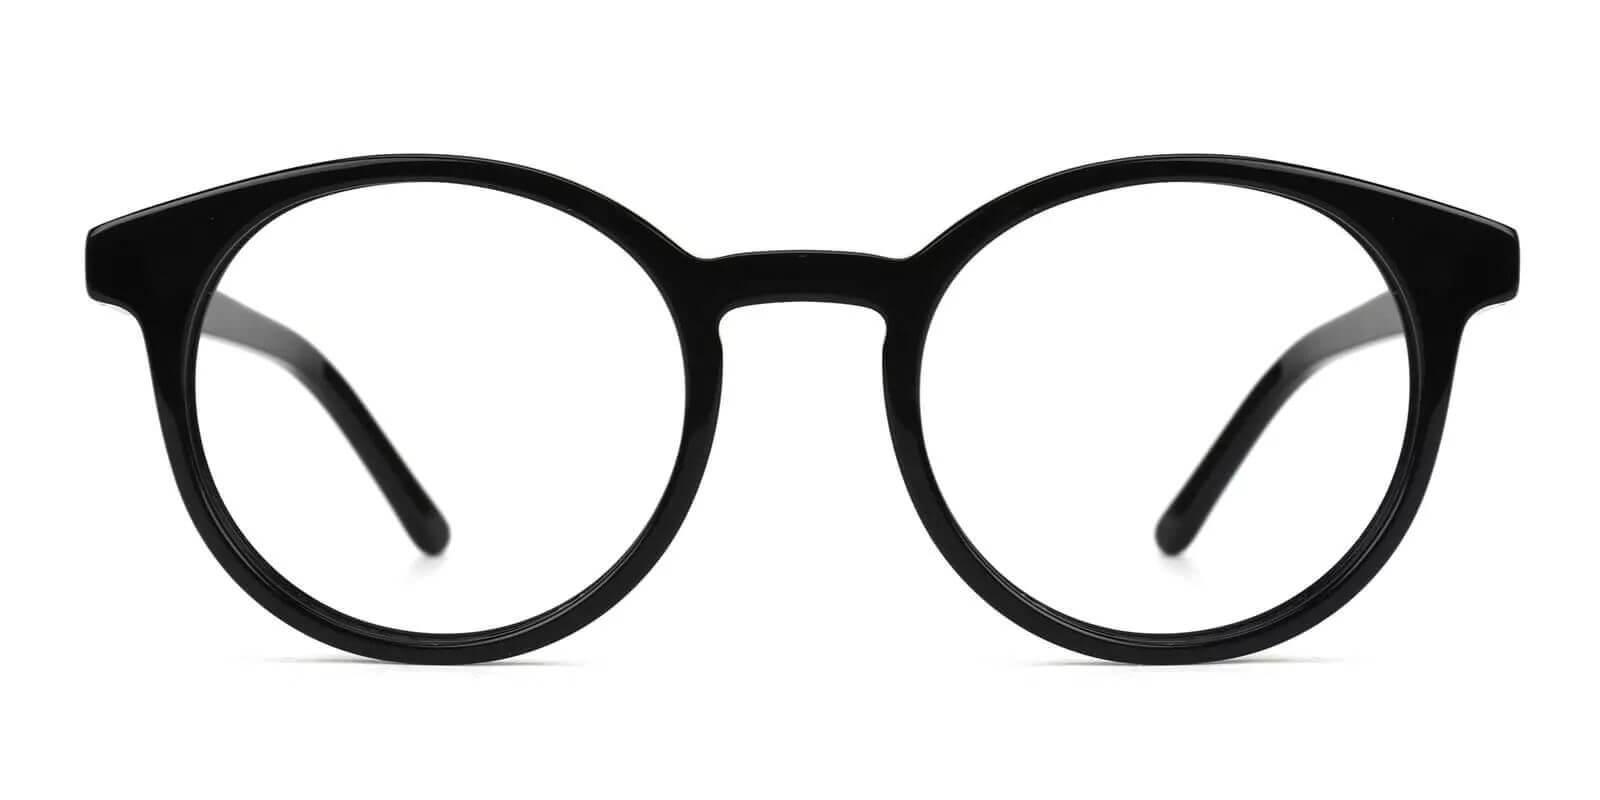 Ottawa Clip-On Black Acetate Eyeglasses , Fashion , UniversalBridgeFit Frames from ABBE Glasses